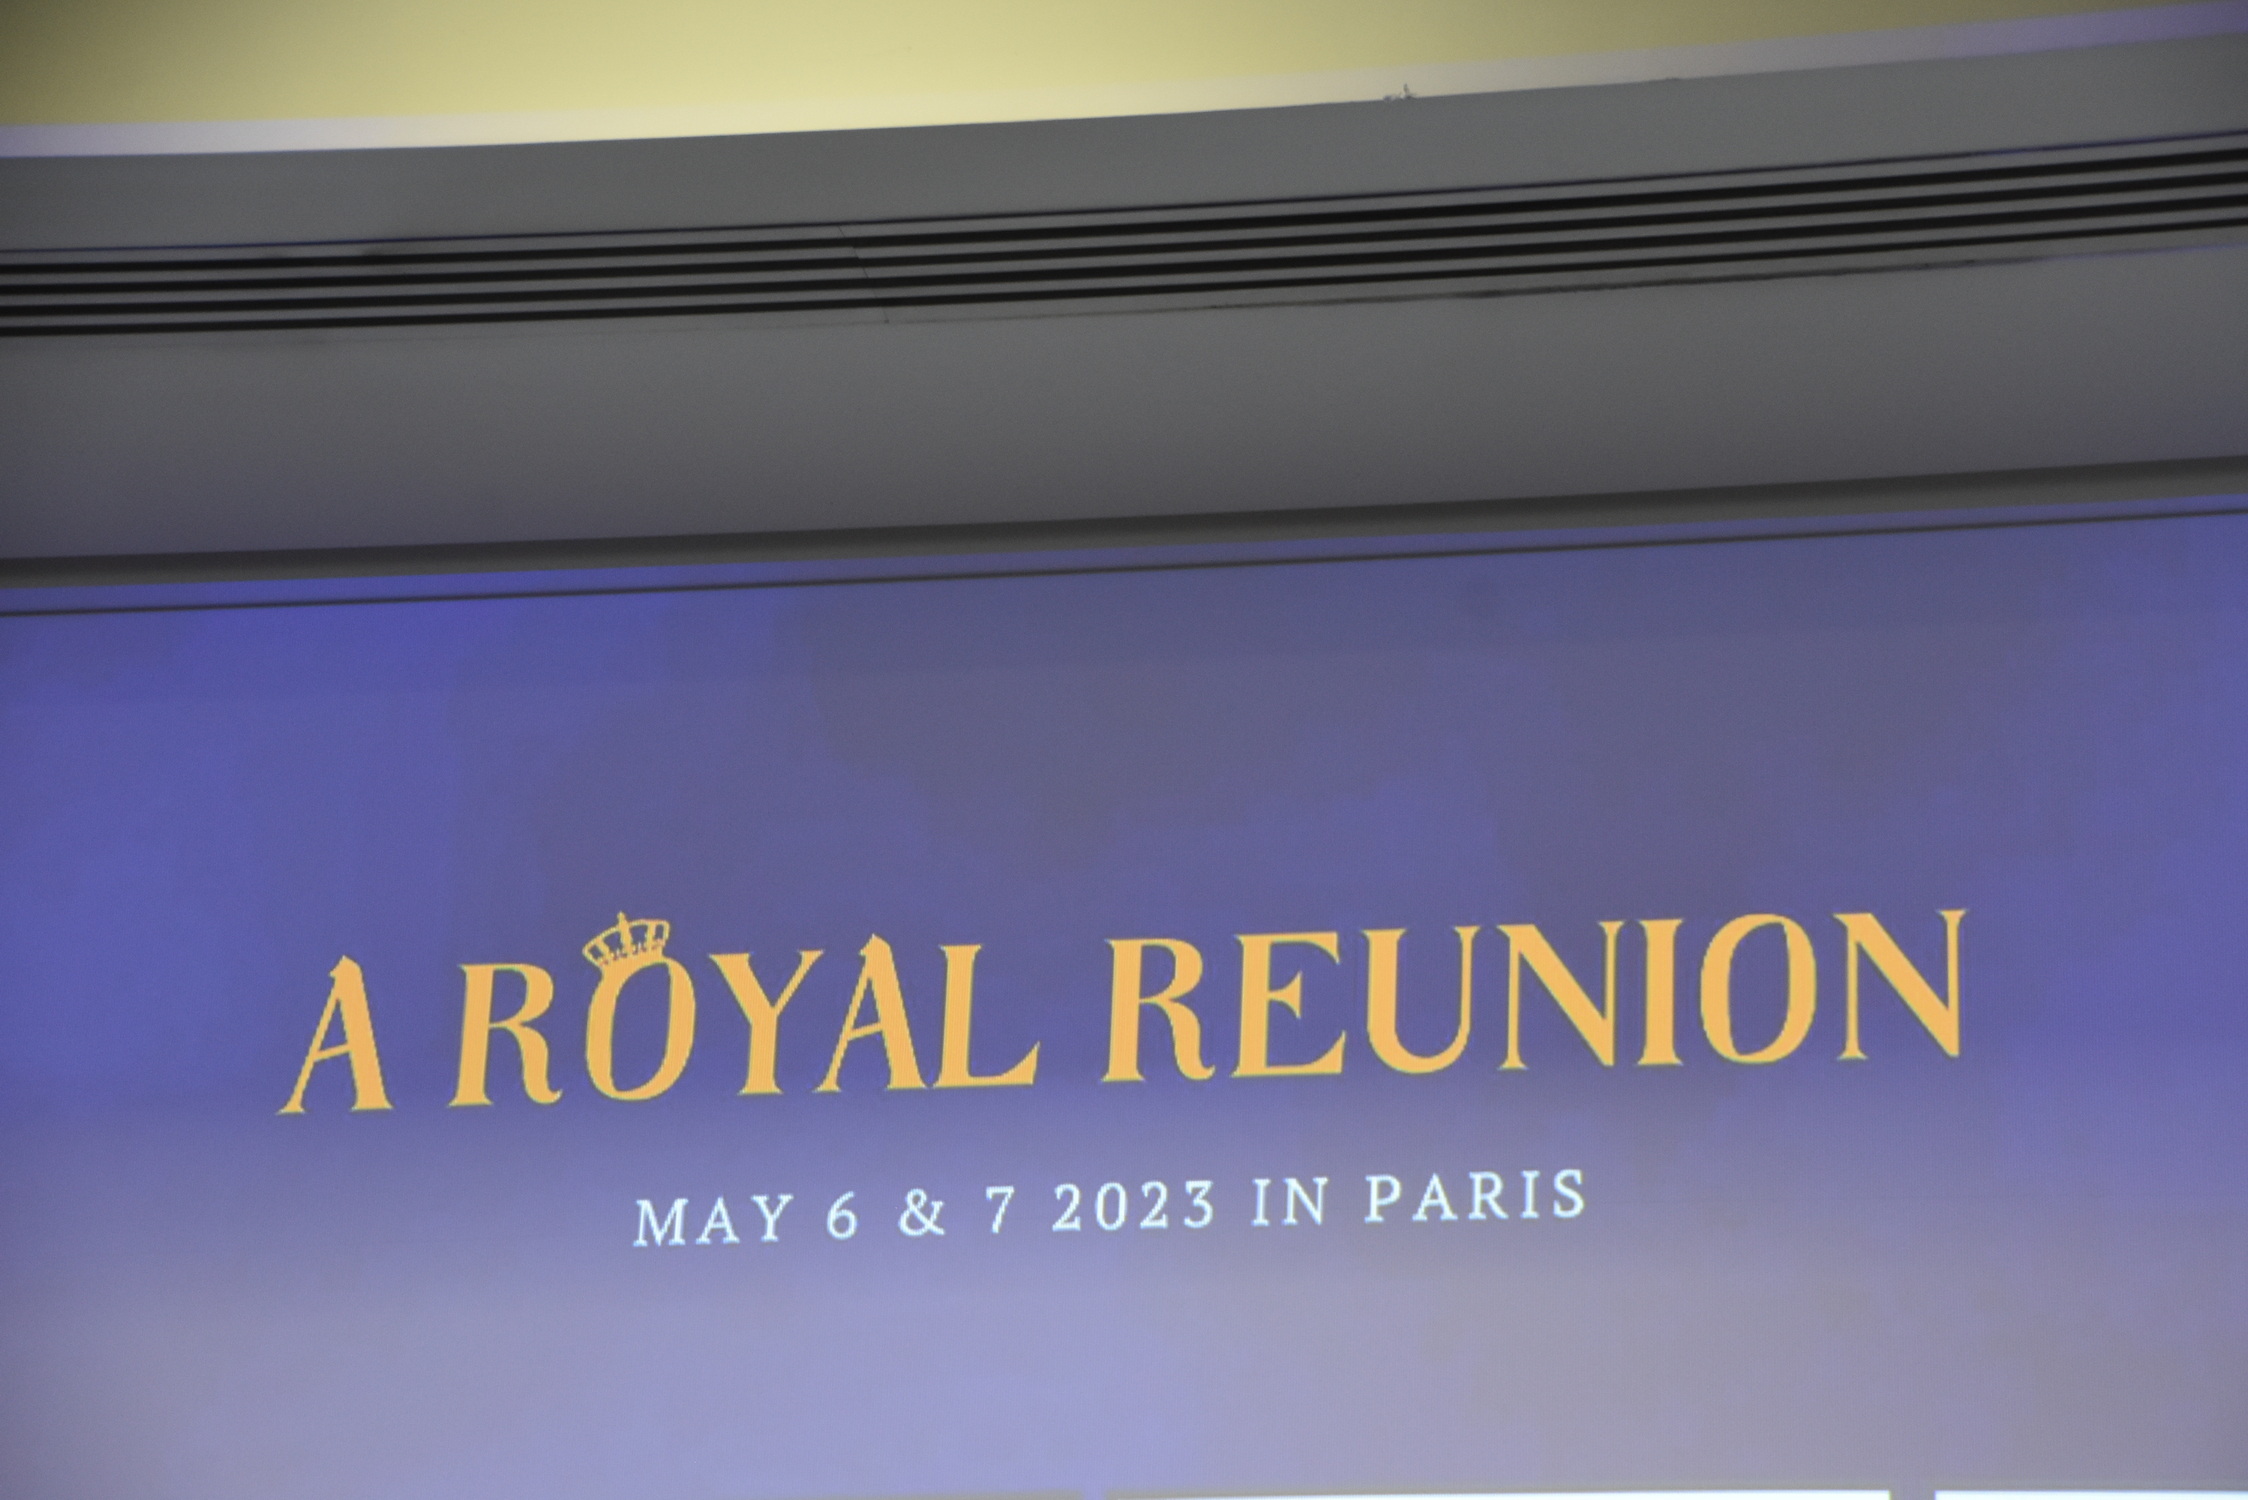 Versailles Convention – A Royal Reunion 2023